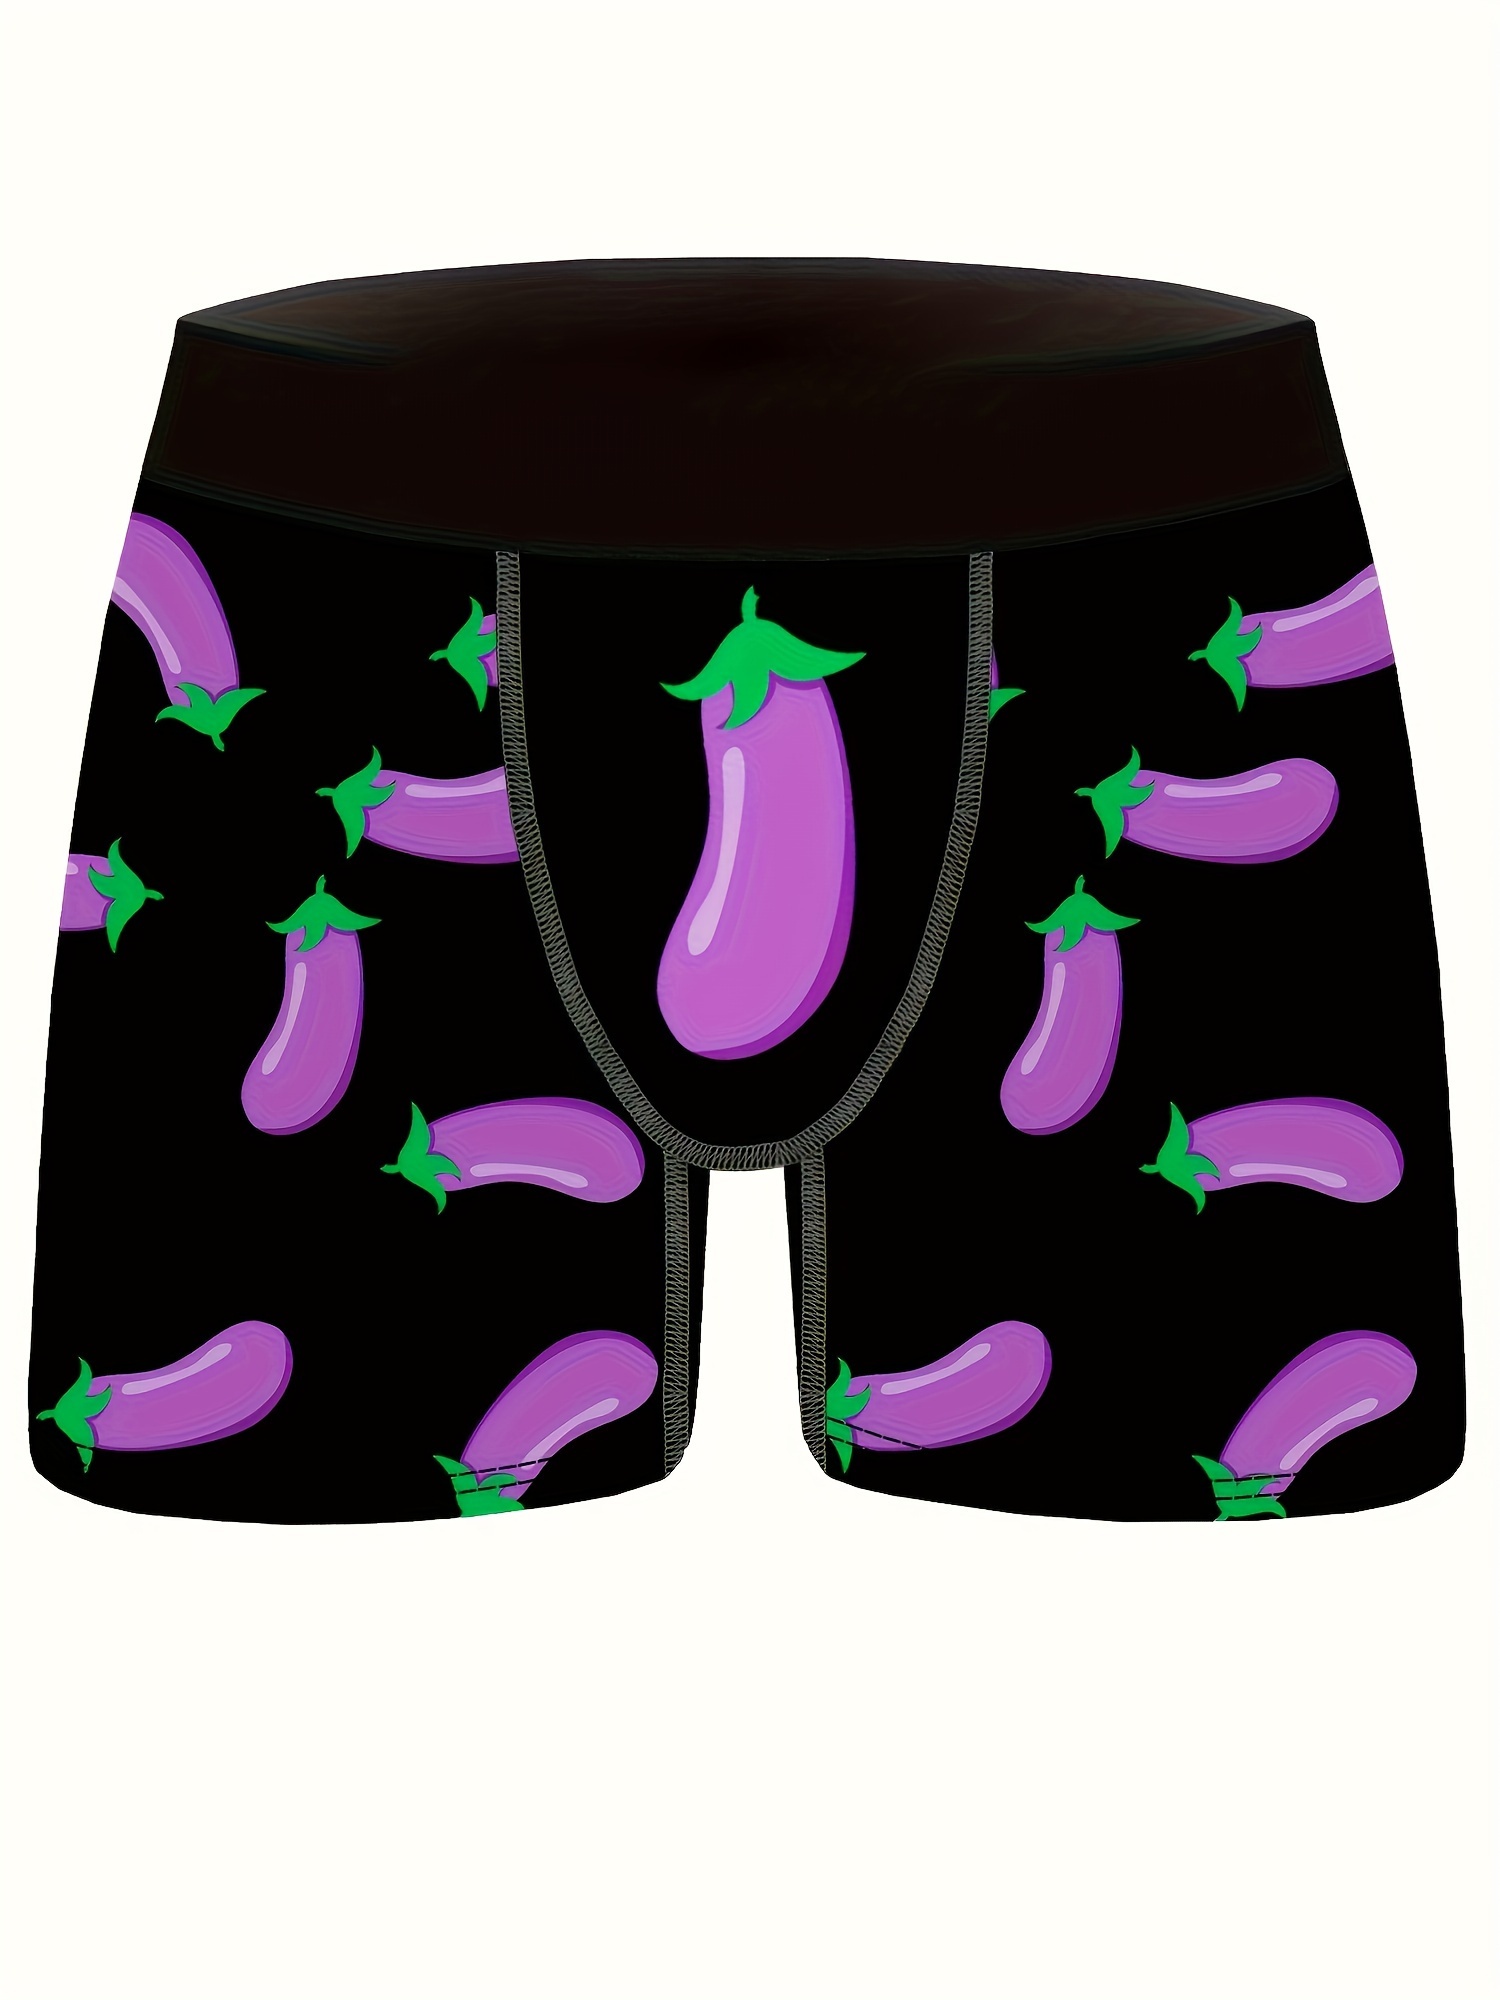 Mens Modal Elephant Trunk Boxers Under Shorts Exotic Jockstraps For Beach  And Bikini Wear 1/5/ From Zhoujielu, $9.6